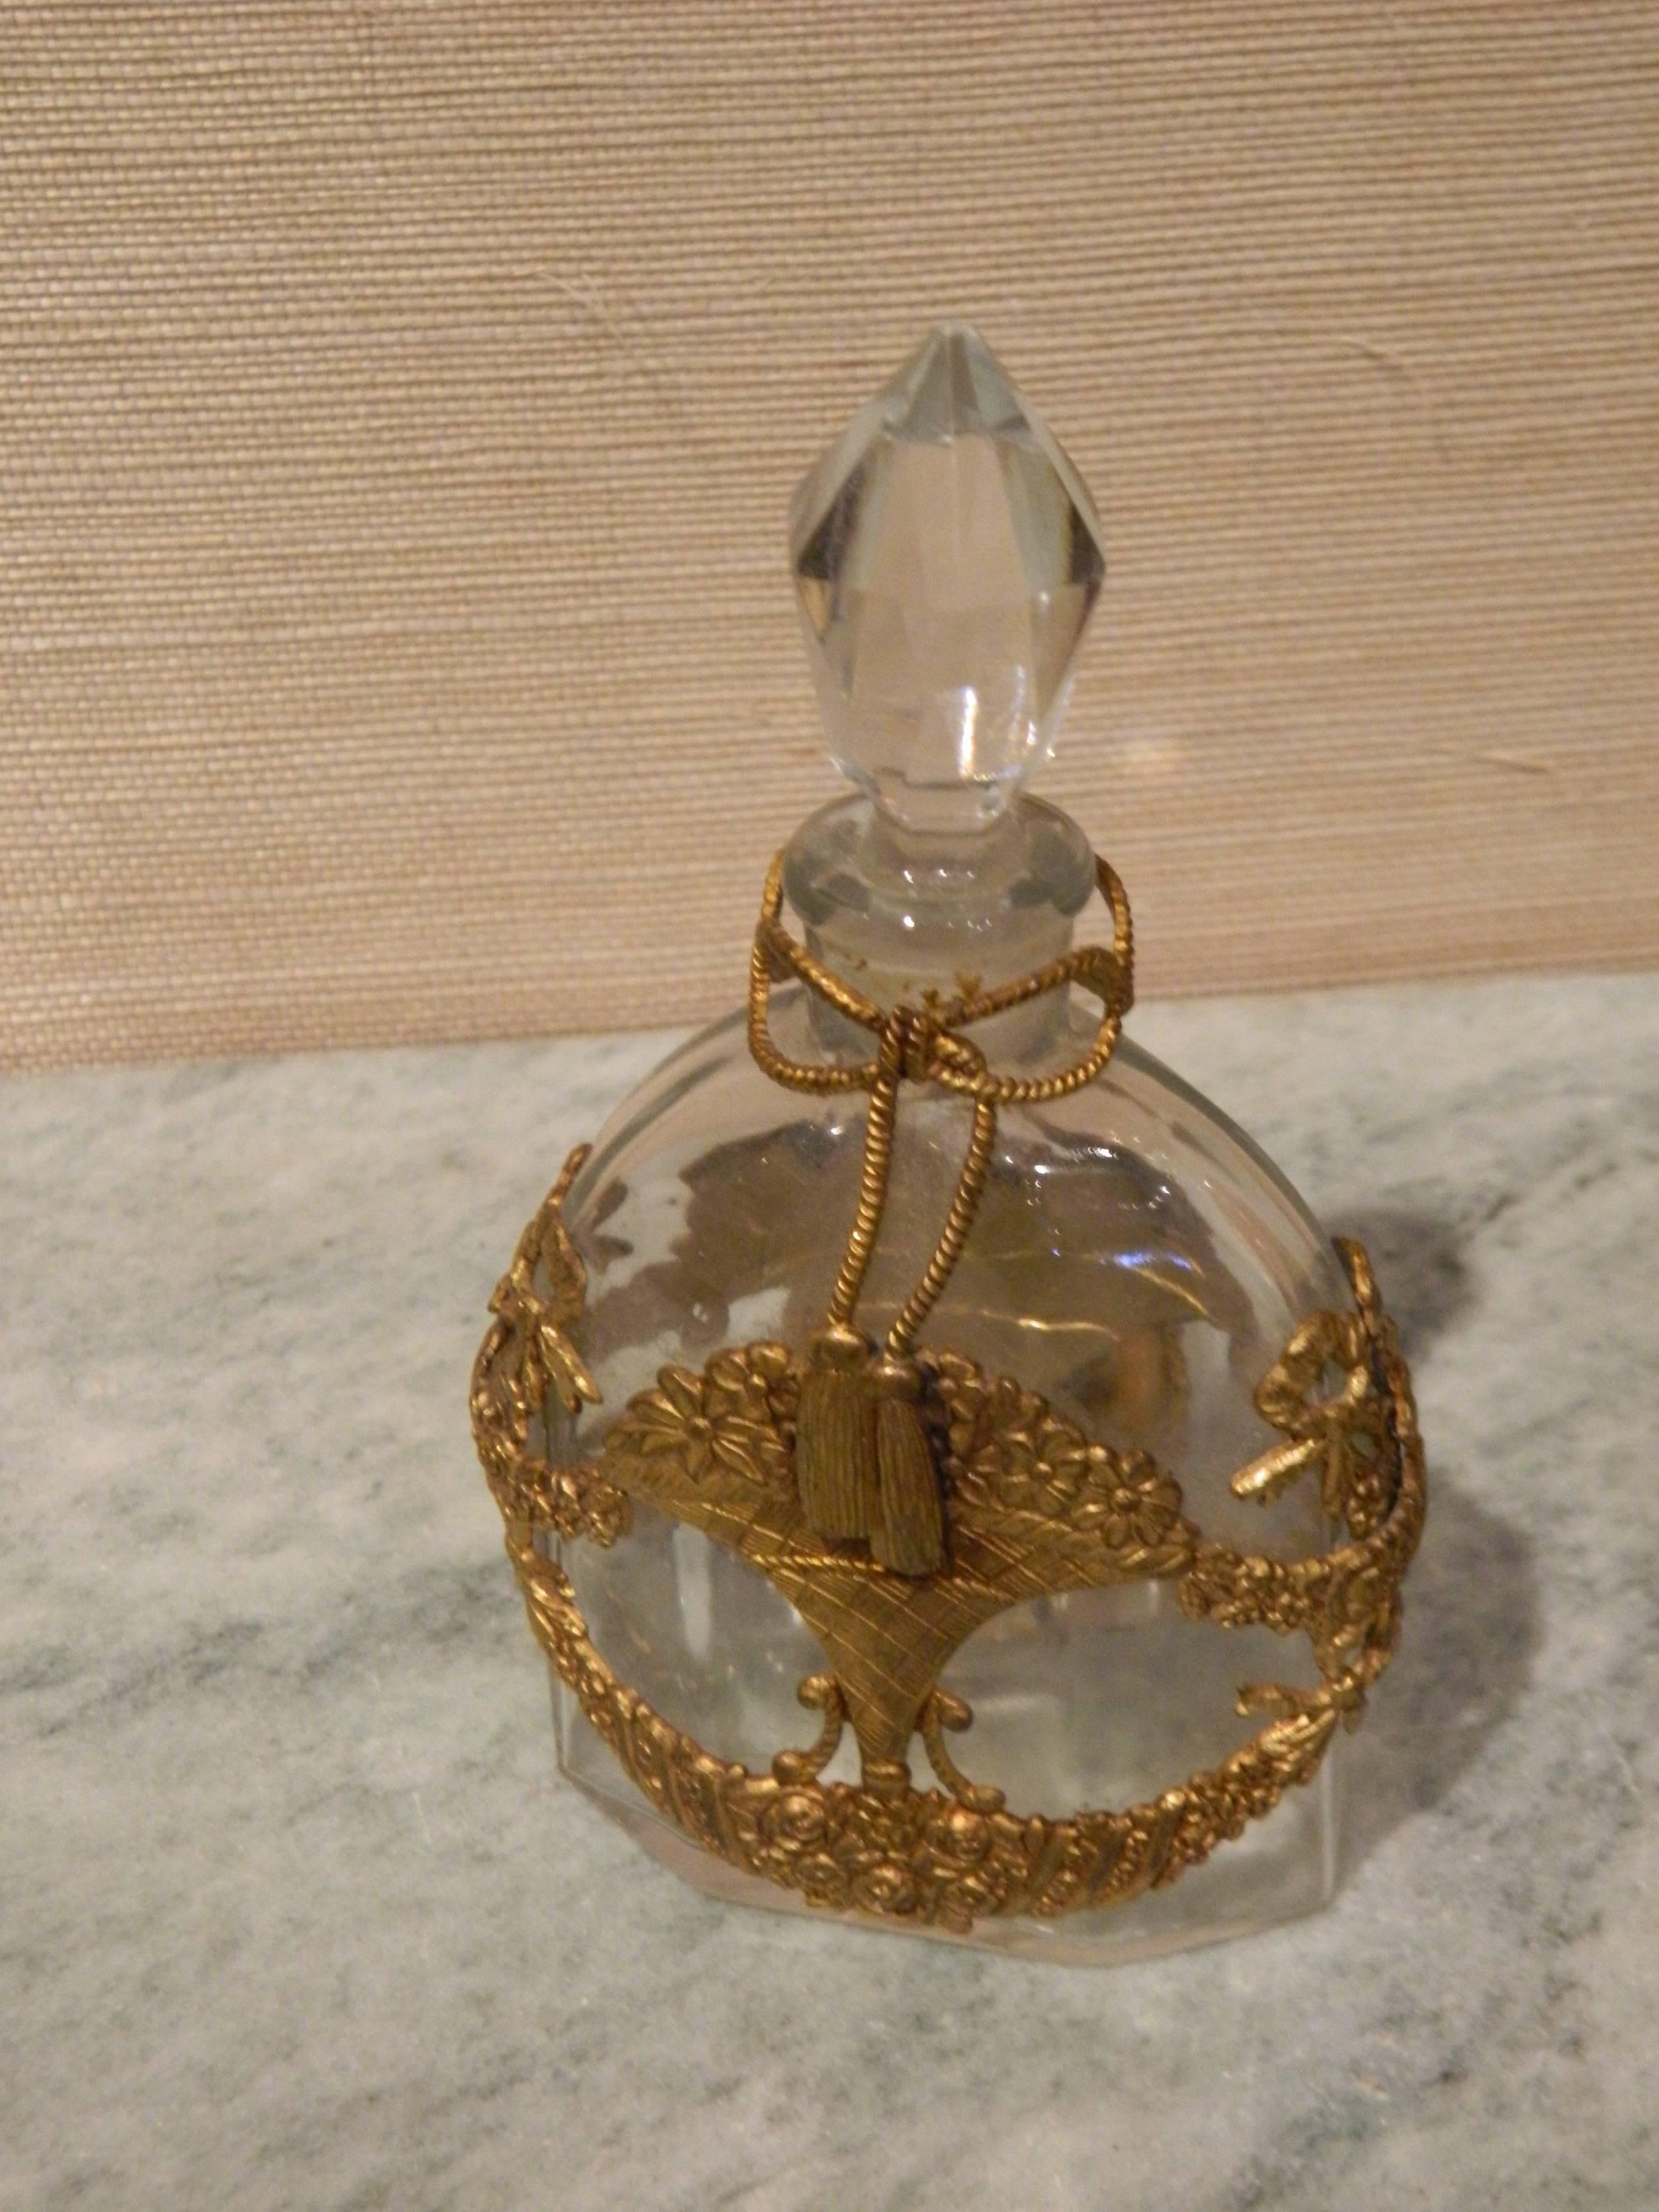 Set of crystal, bronze doré, and enamel perfume bottle and dresser box, 19th century.
Perfume bottle - 5